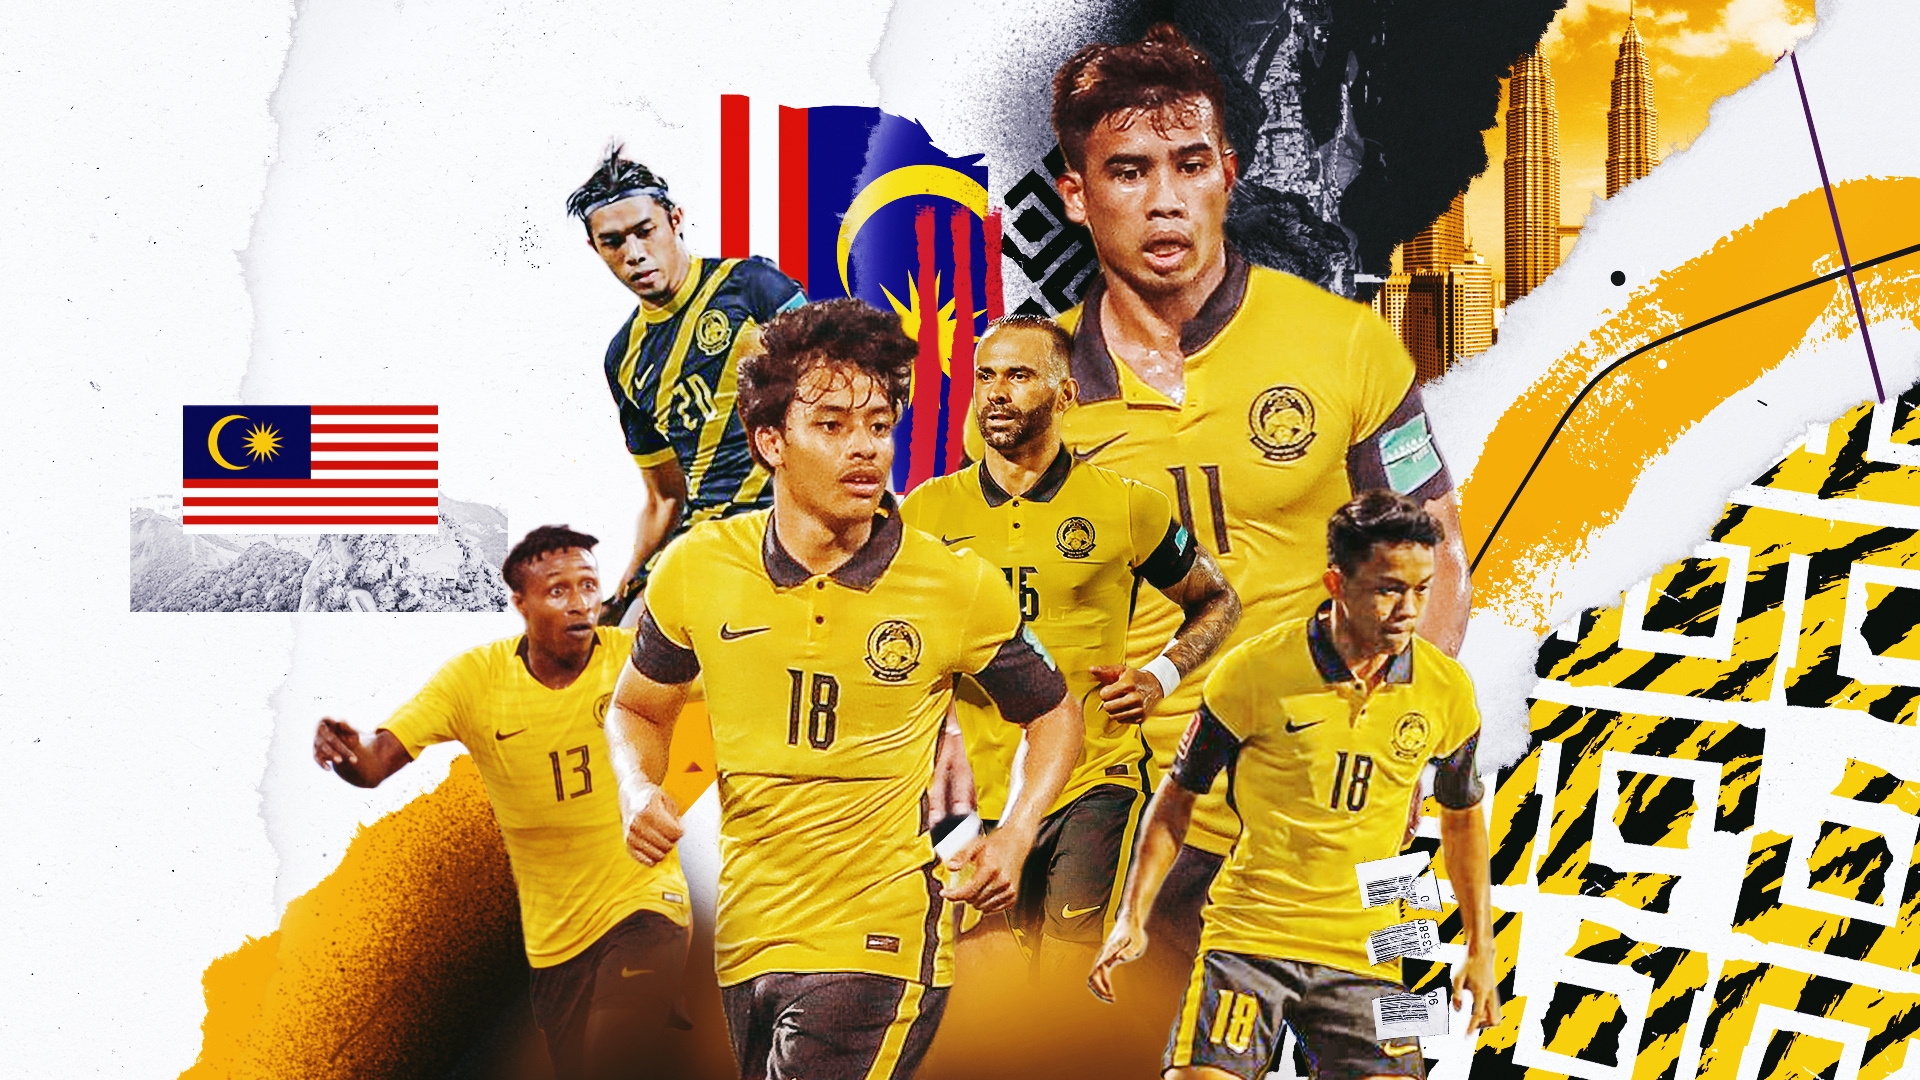 Jadual aff suzuki cup 2021 malaysia